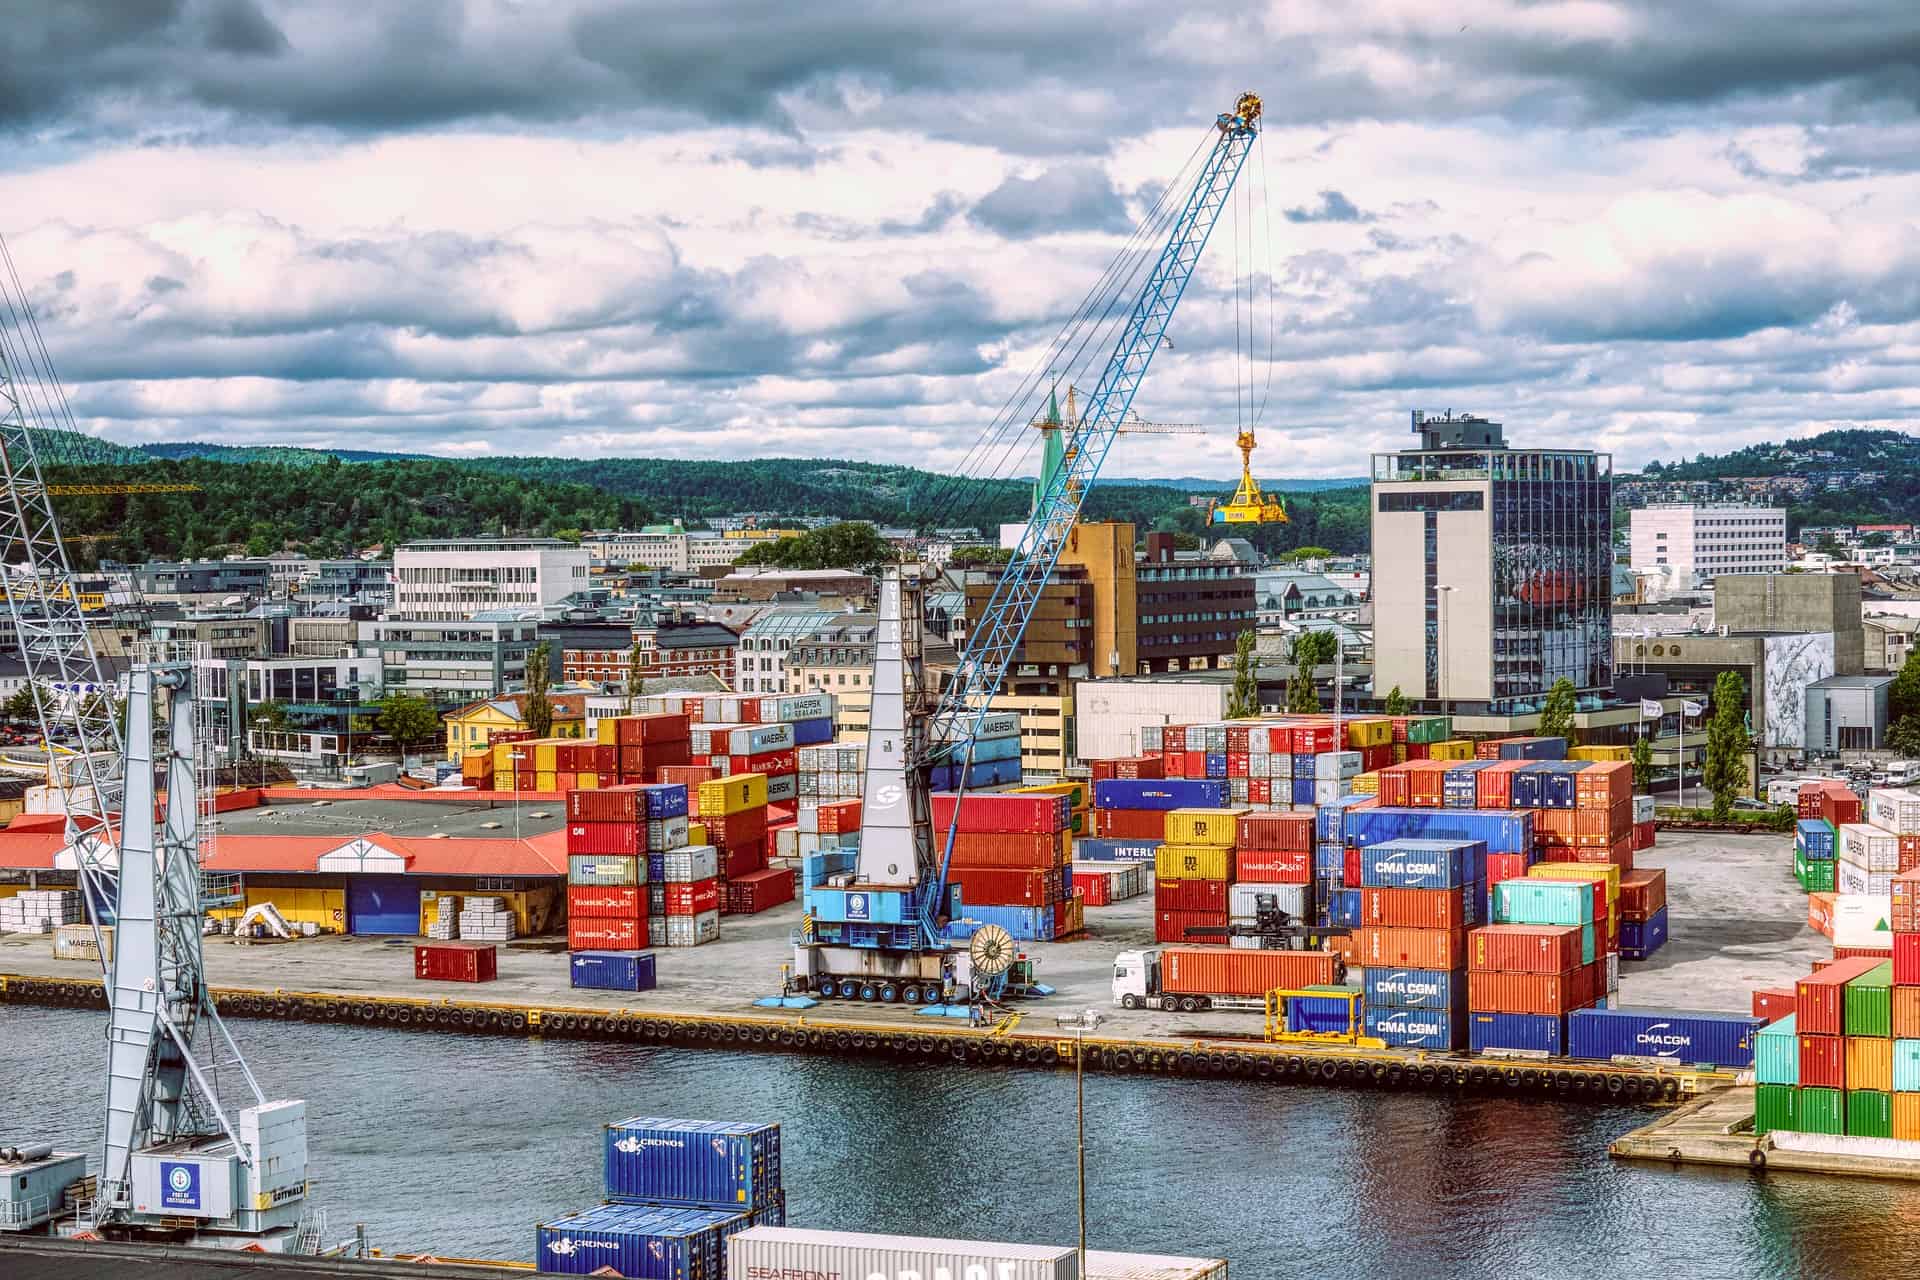 Kristiansand hamnarbete